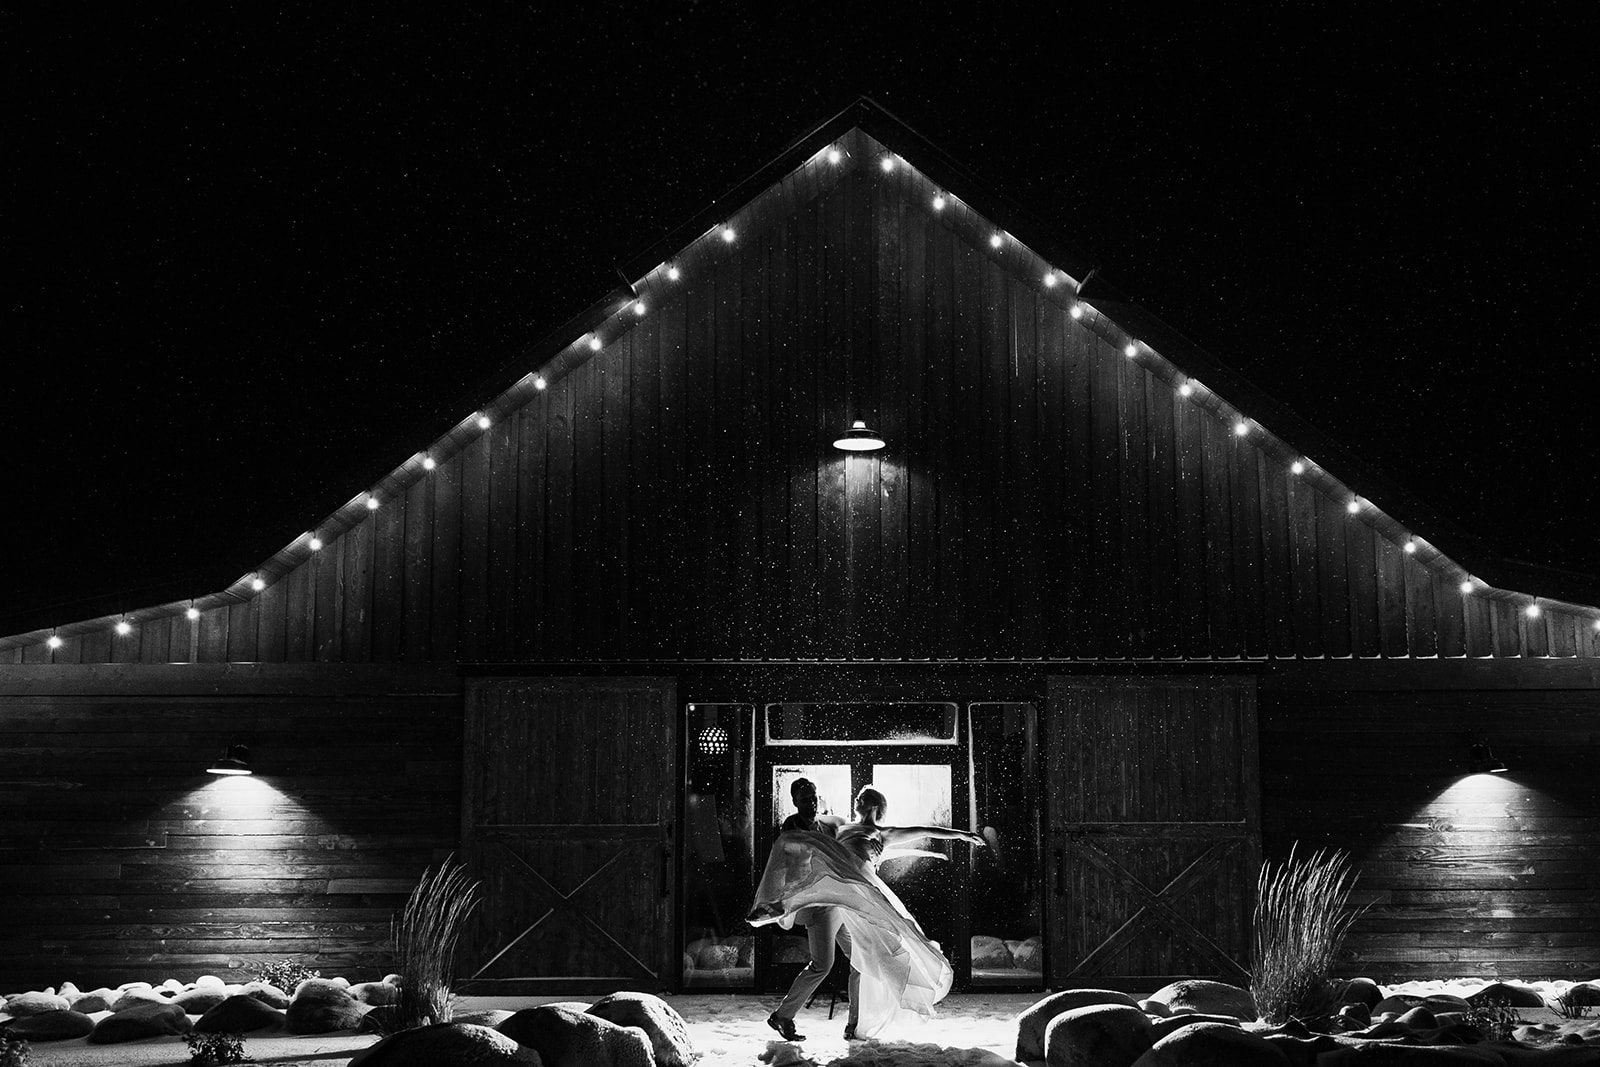 Off camera flash wedding photos, Snow wedding photos at The Barn at Sunset Ranch, Night wedding photos in the snow